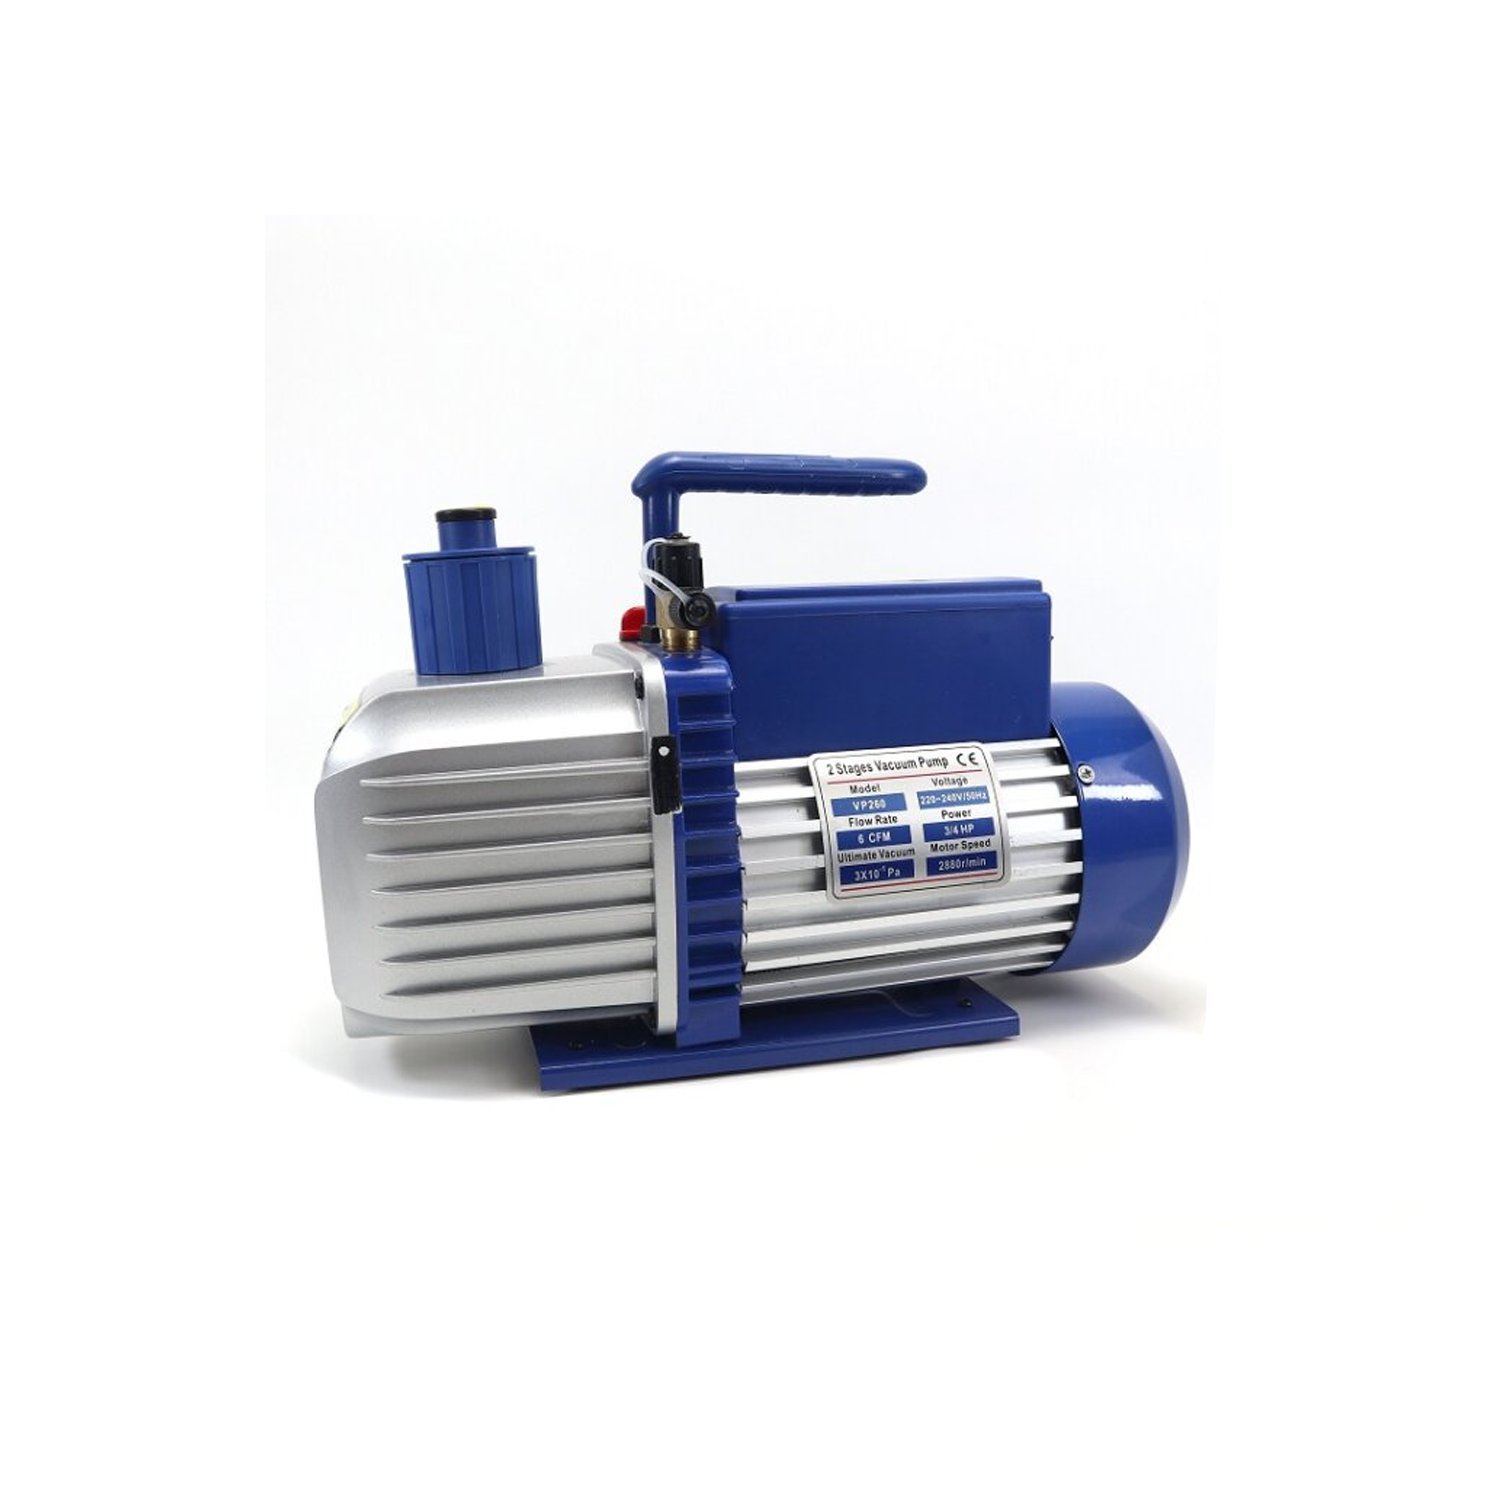 Vacuum pump double voltage 170/142 lit/min - 2 stages, Mastercool 90066-2V-220SVB